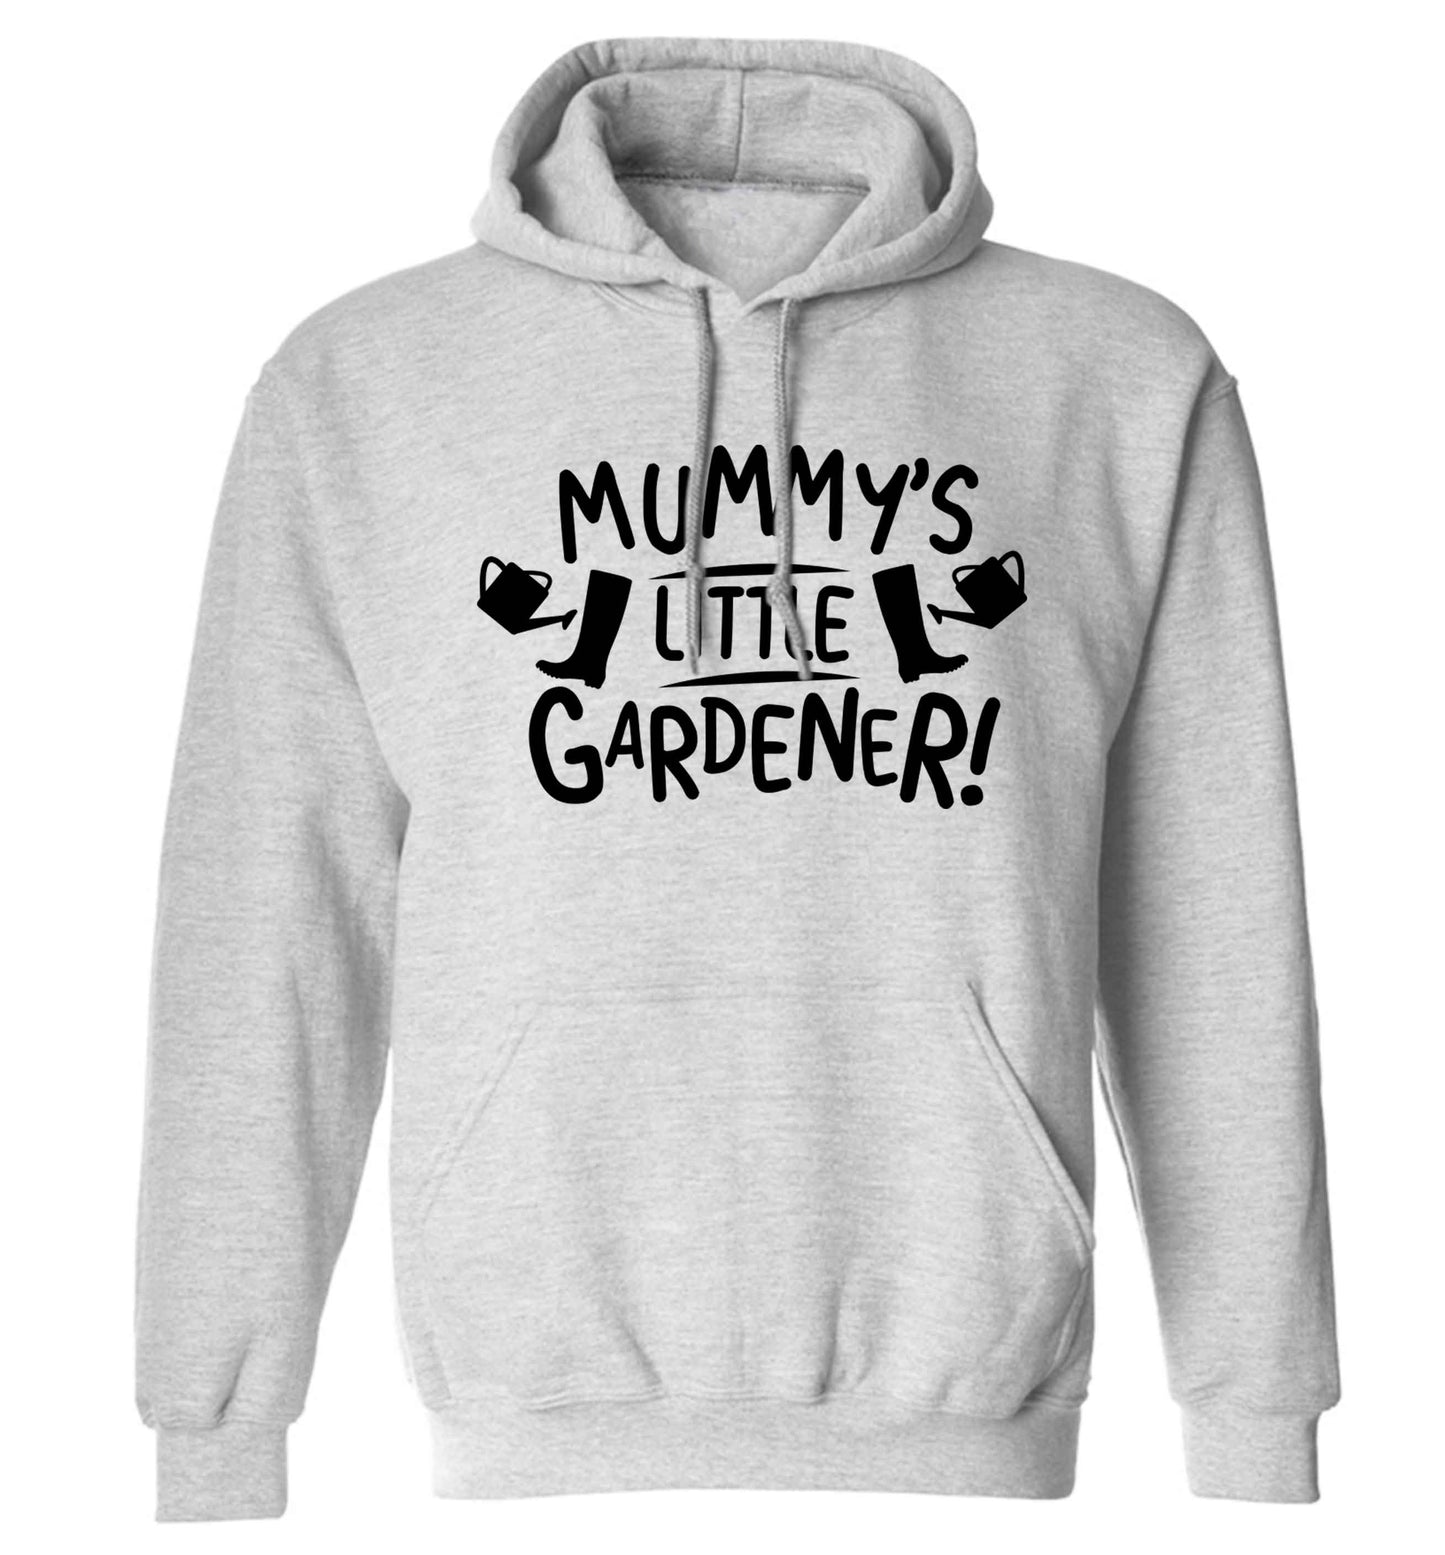 Mummy's little gardener adults unisex grey hoodie 2XL